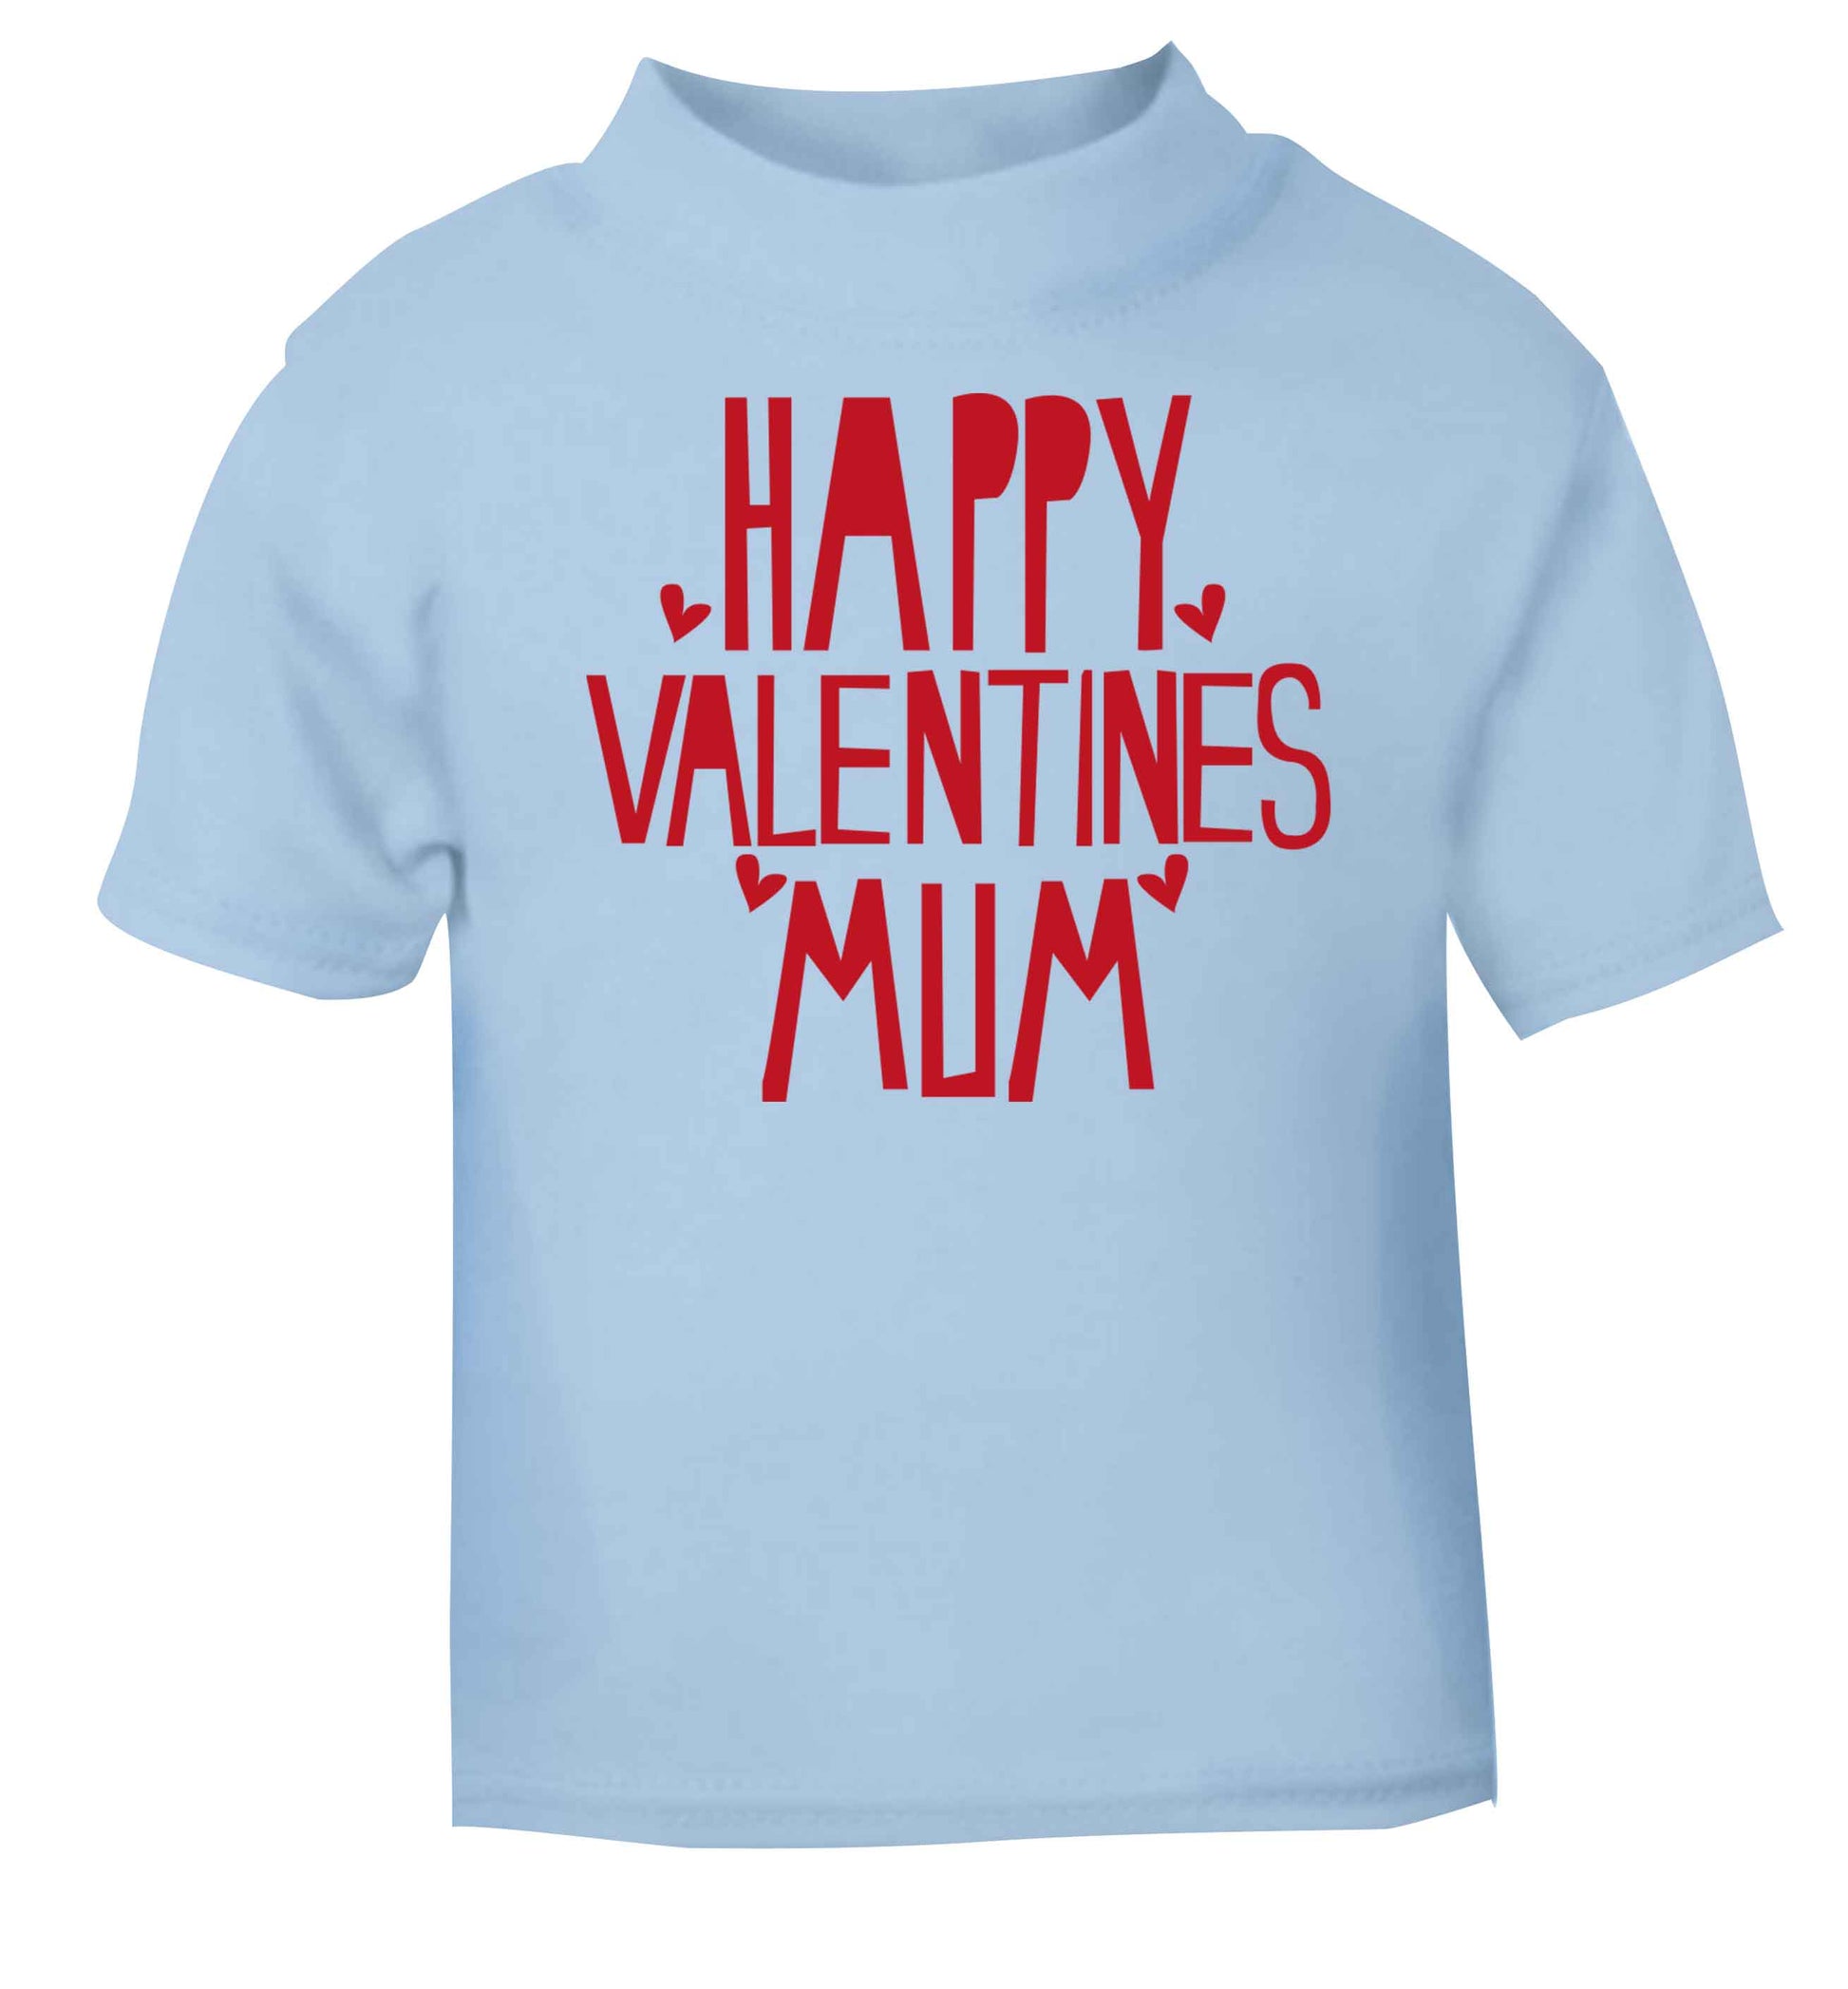 Happy valentines mum light blue baby toddler Tshirt 2 Years